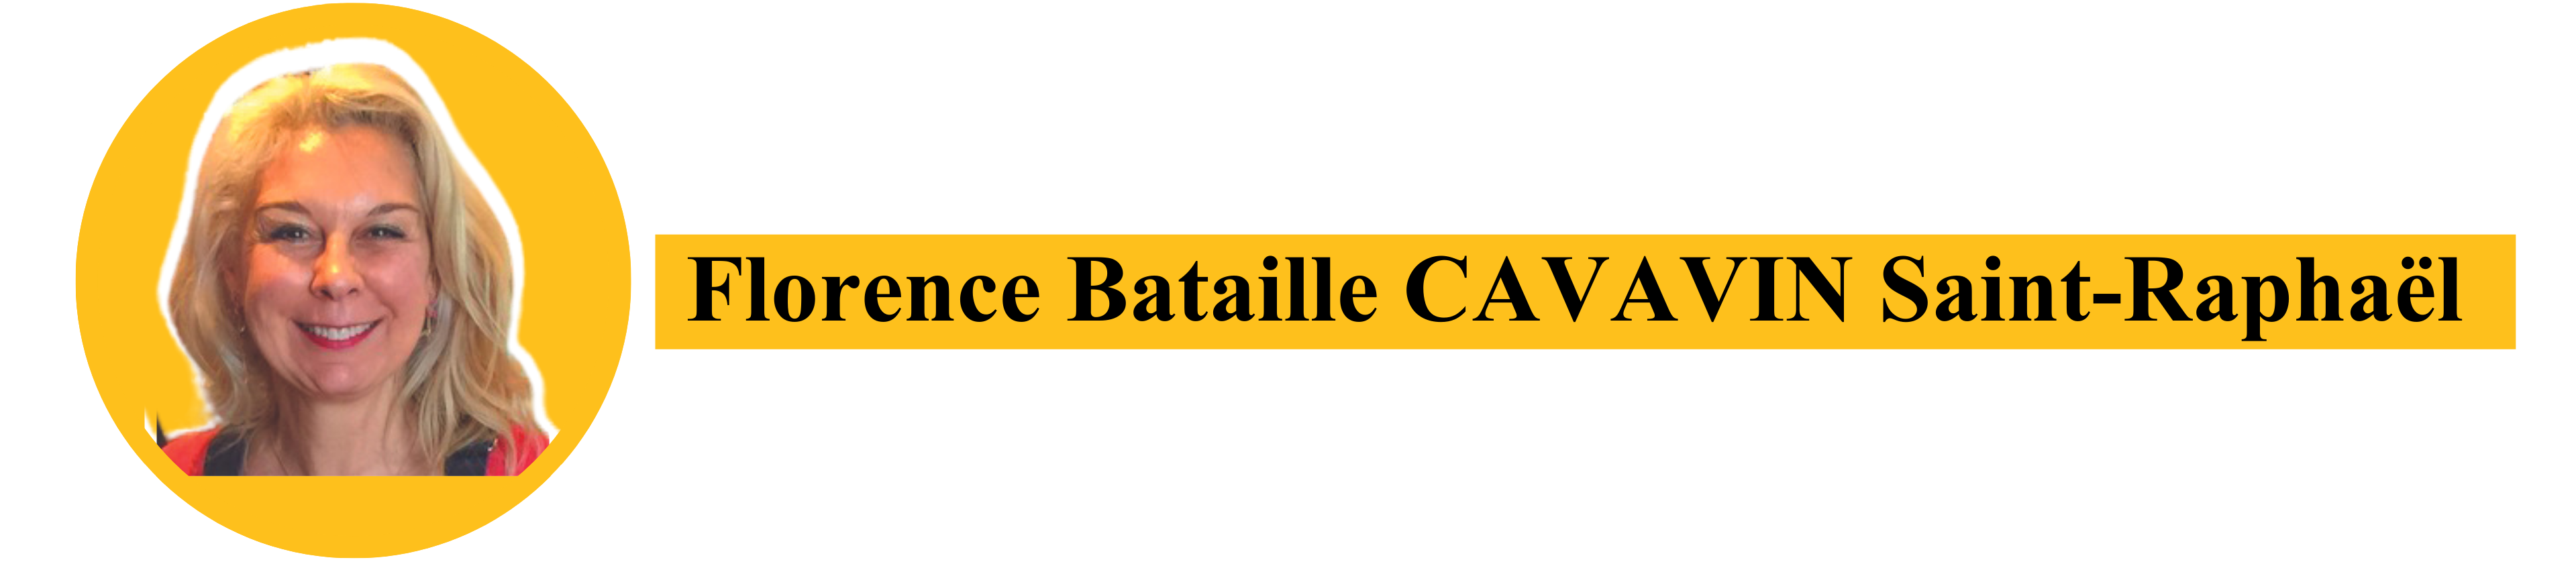 Florence Bataille Cavavin Saint-Raphael